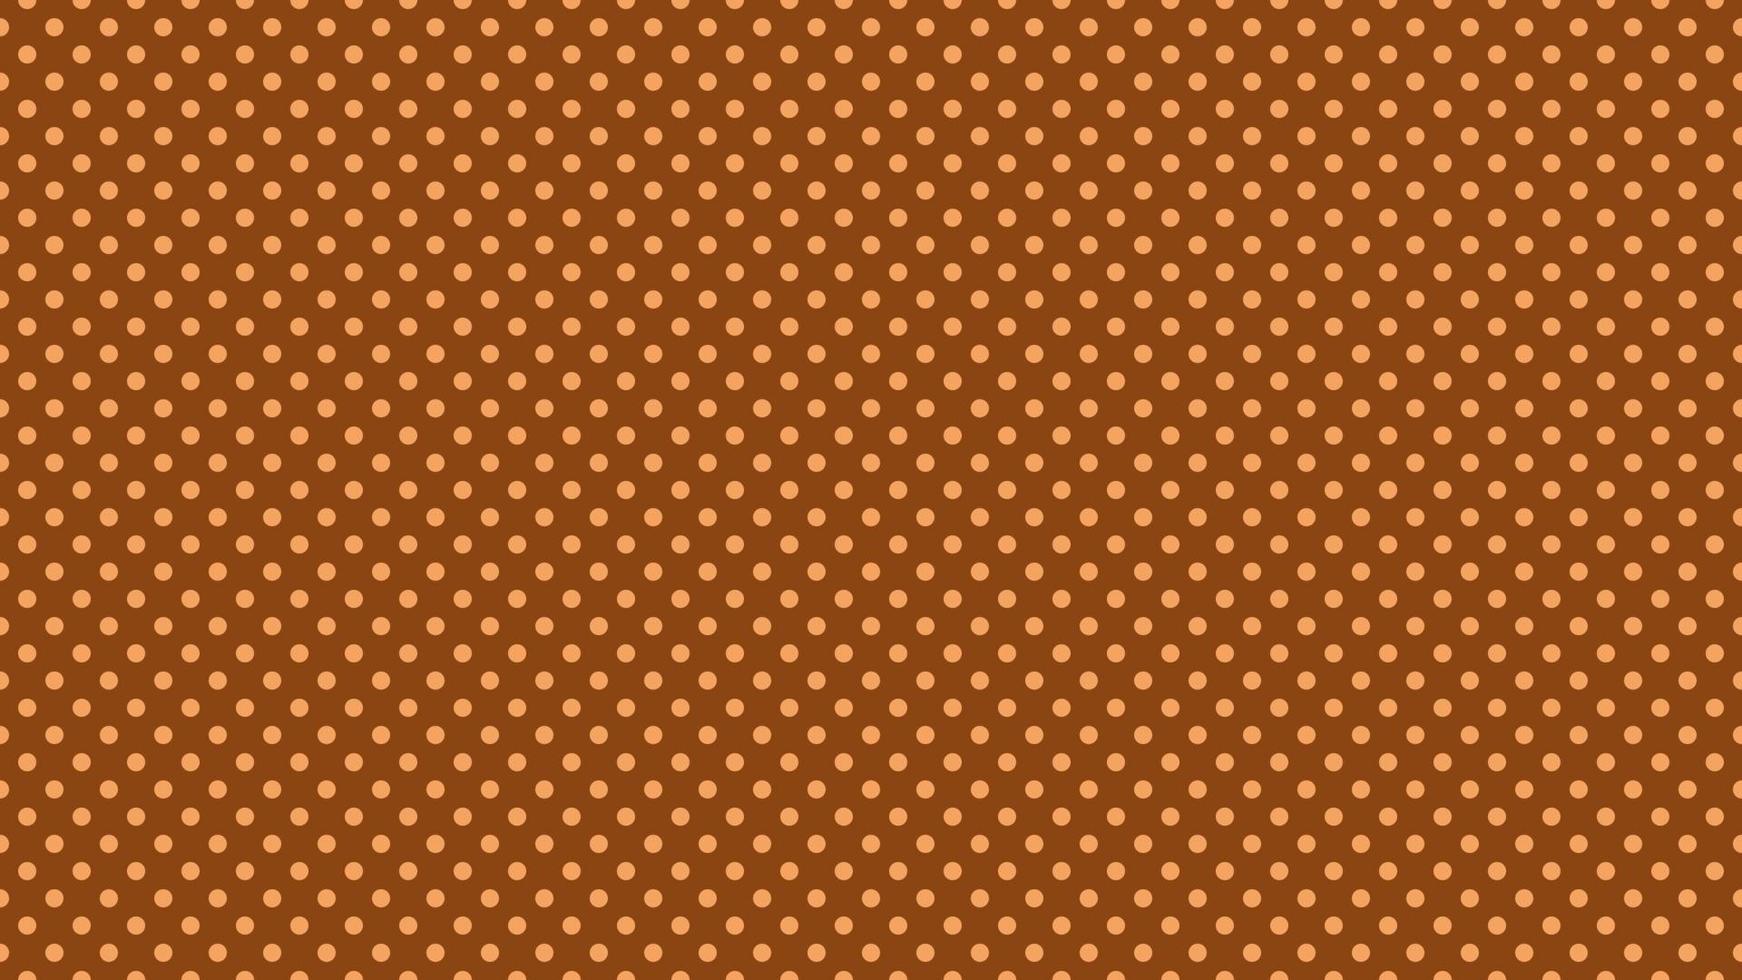 sandy brown polka dots over saddle brown background vector